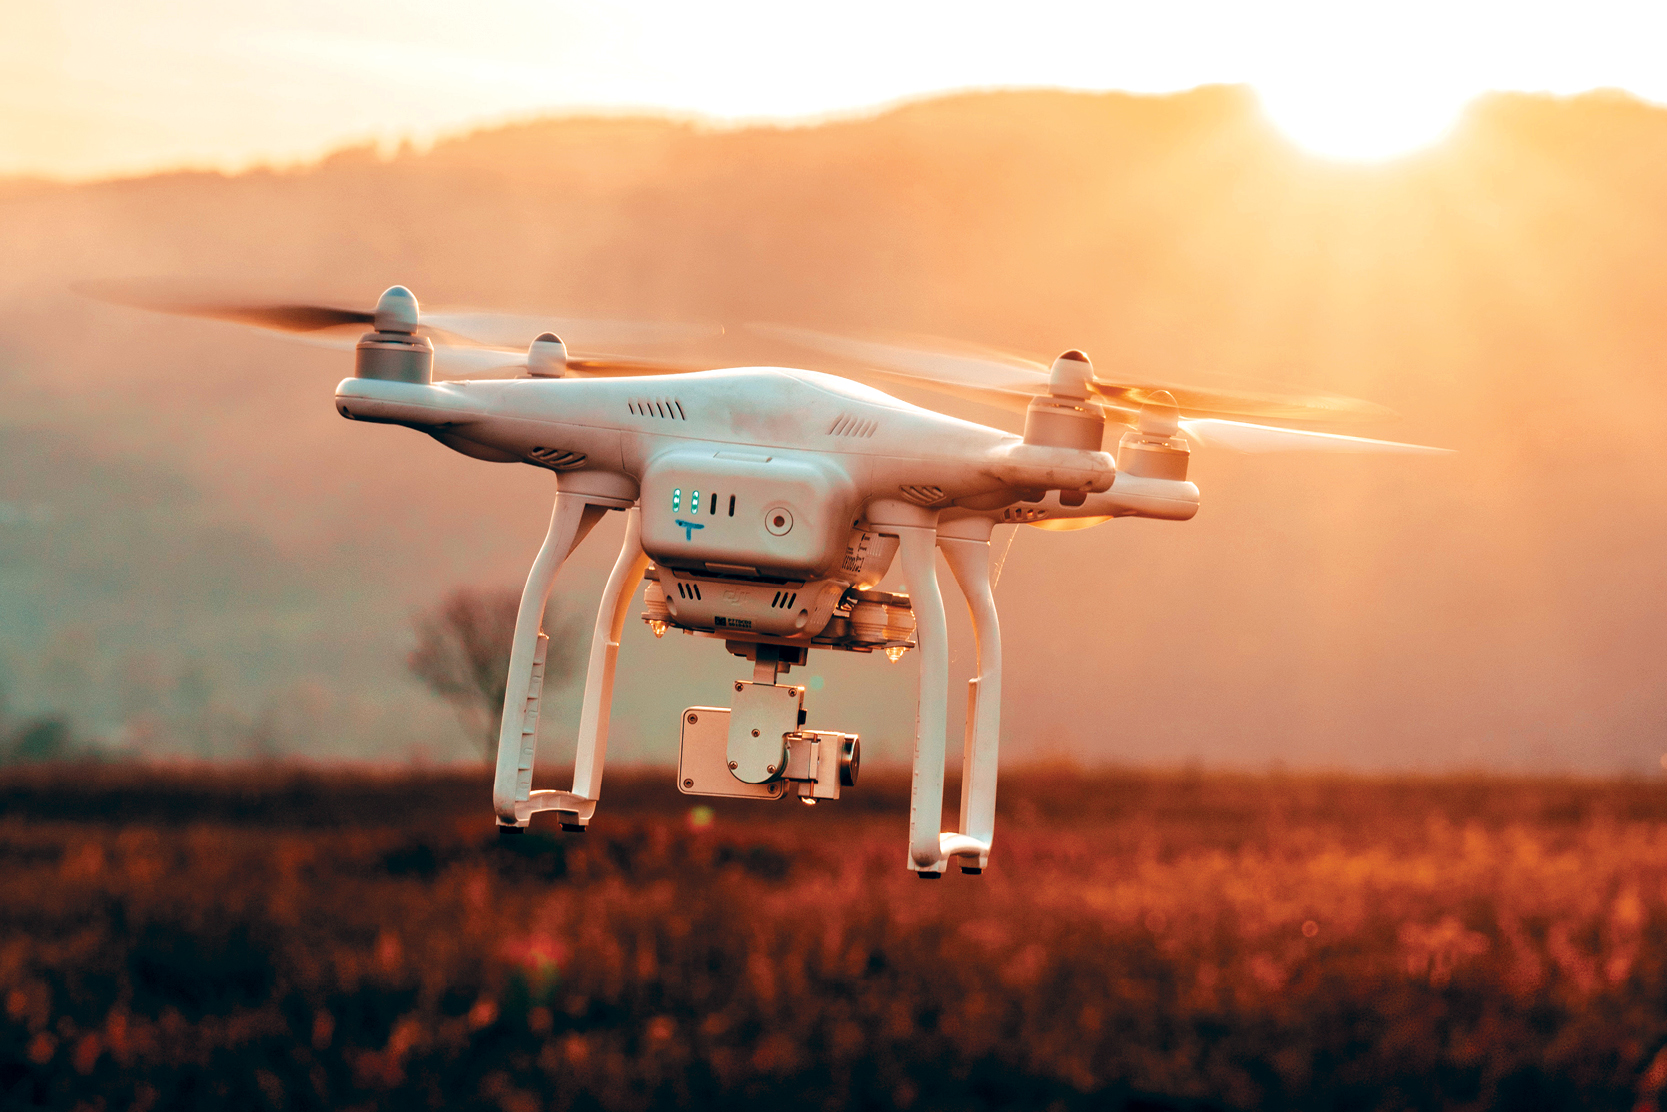 Drone Market Swot Analysis by Key Players Textron, The Boeing Company, DJI